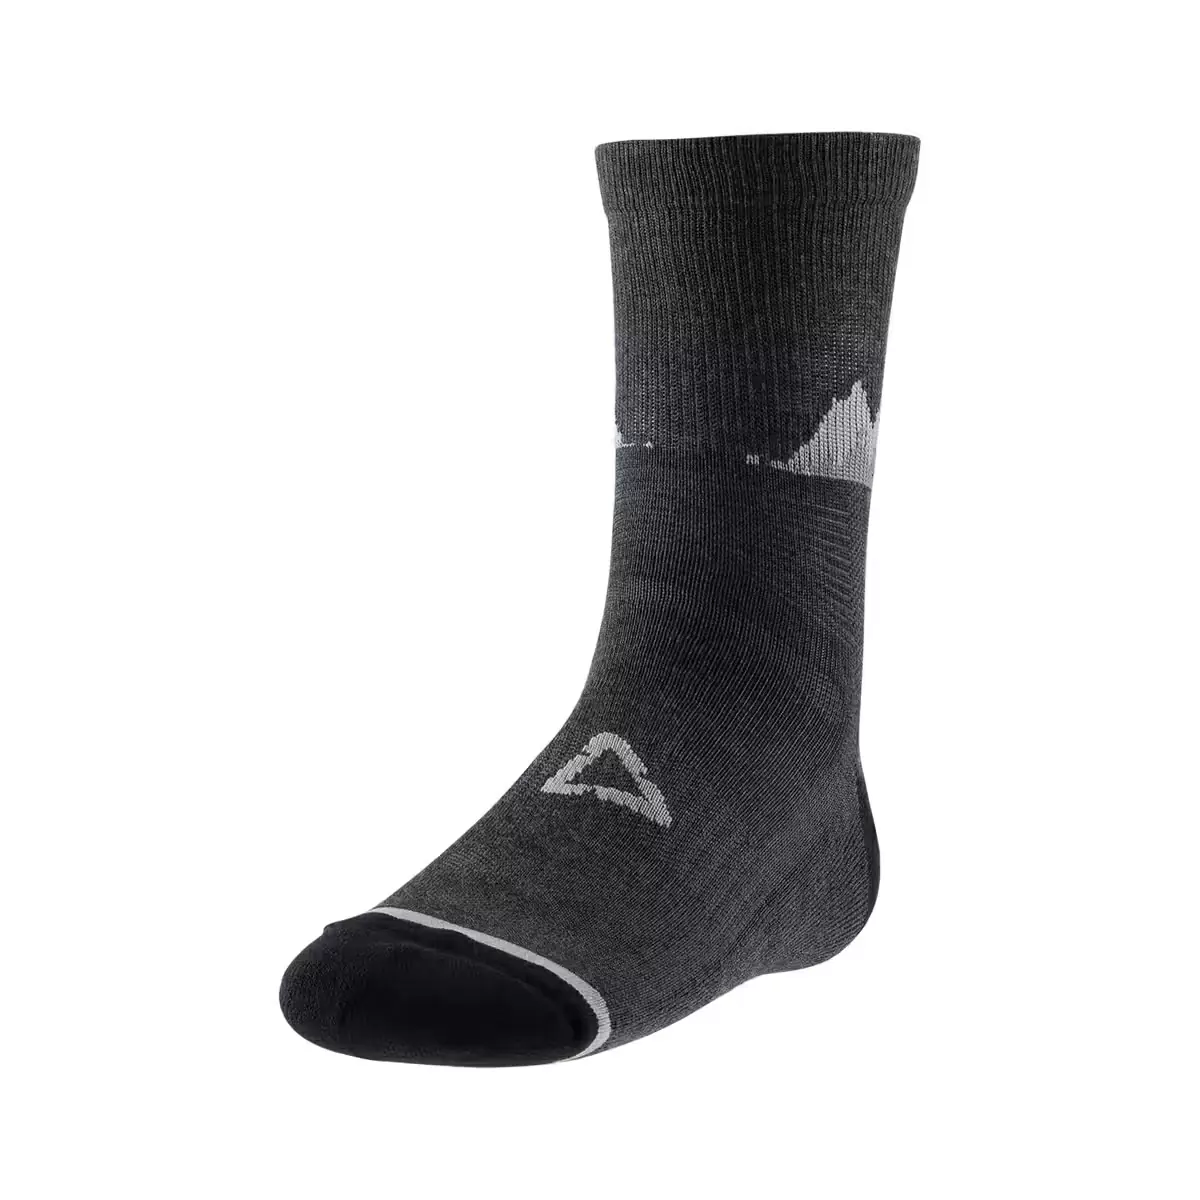 Reinforced Mtb Socks Grey Size L/XL (43-48) - image